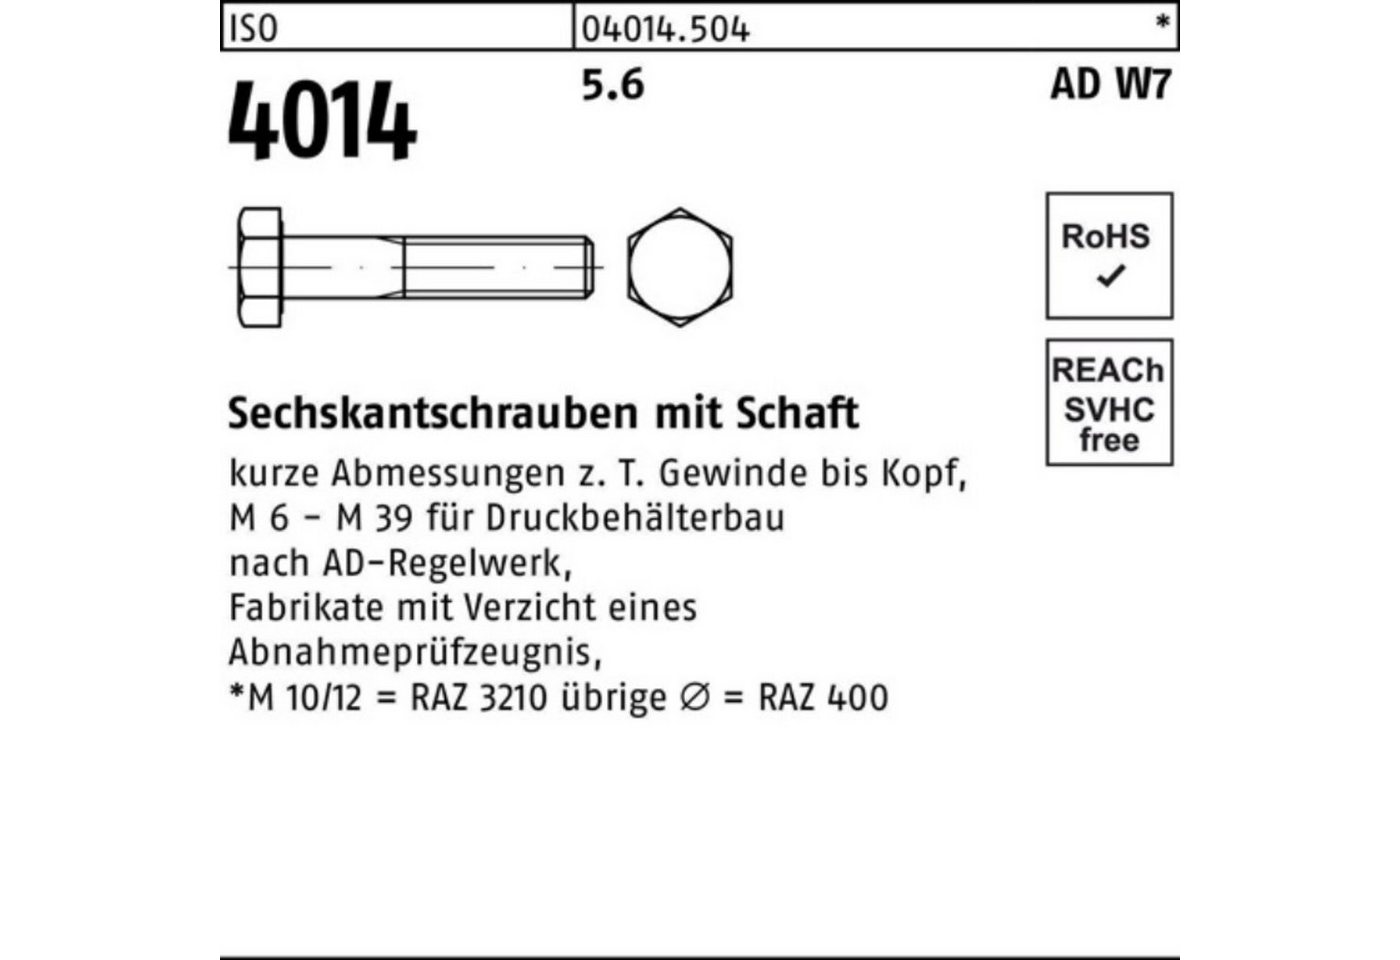 Bufab Sechskantschraube 100er Pack Sechskantschraube ISO 4014 Schaft M36x 170 5.6 W7 1 Stück von Bufab